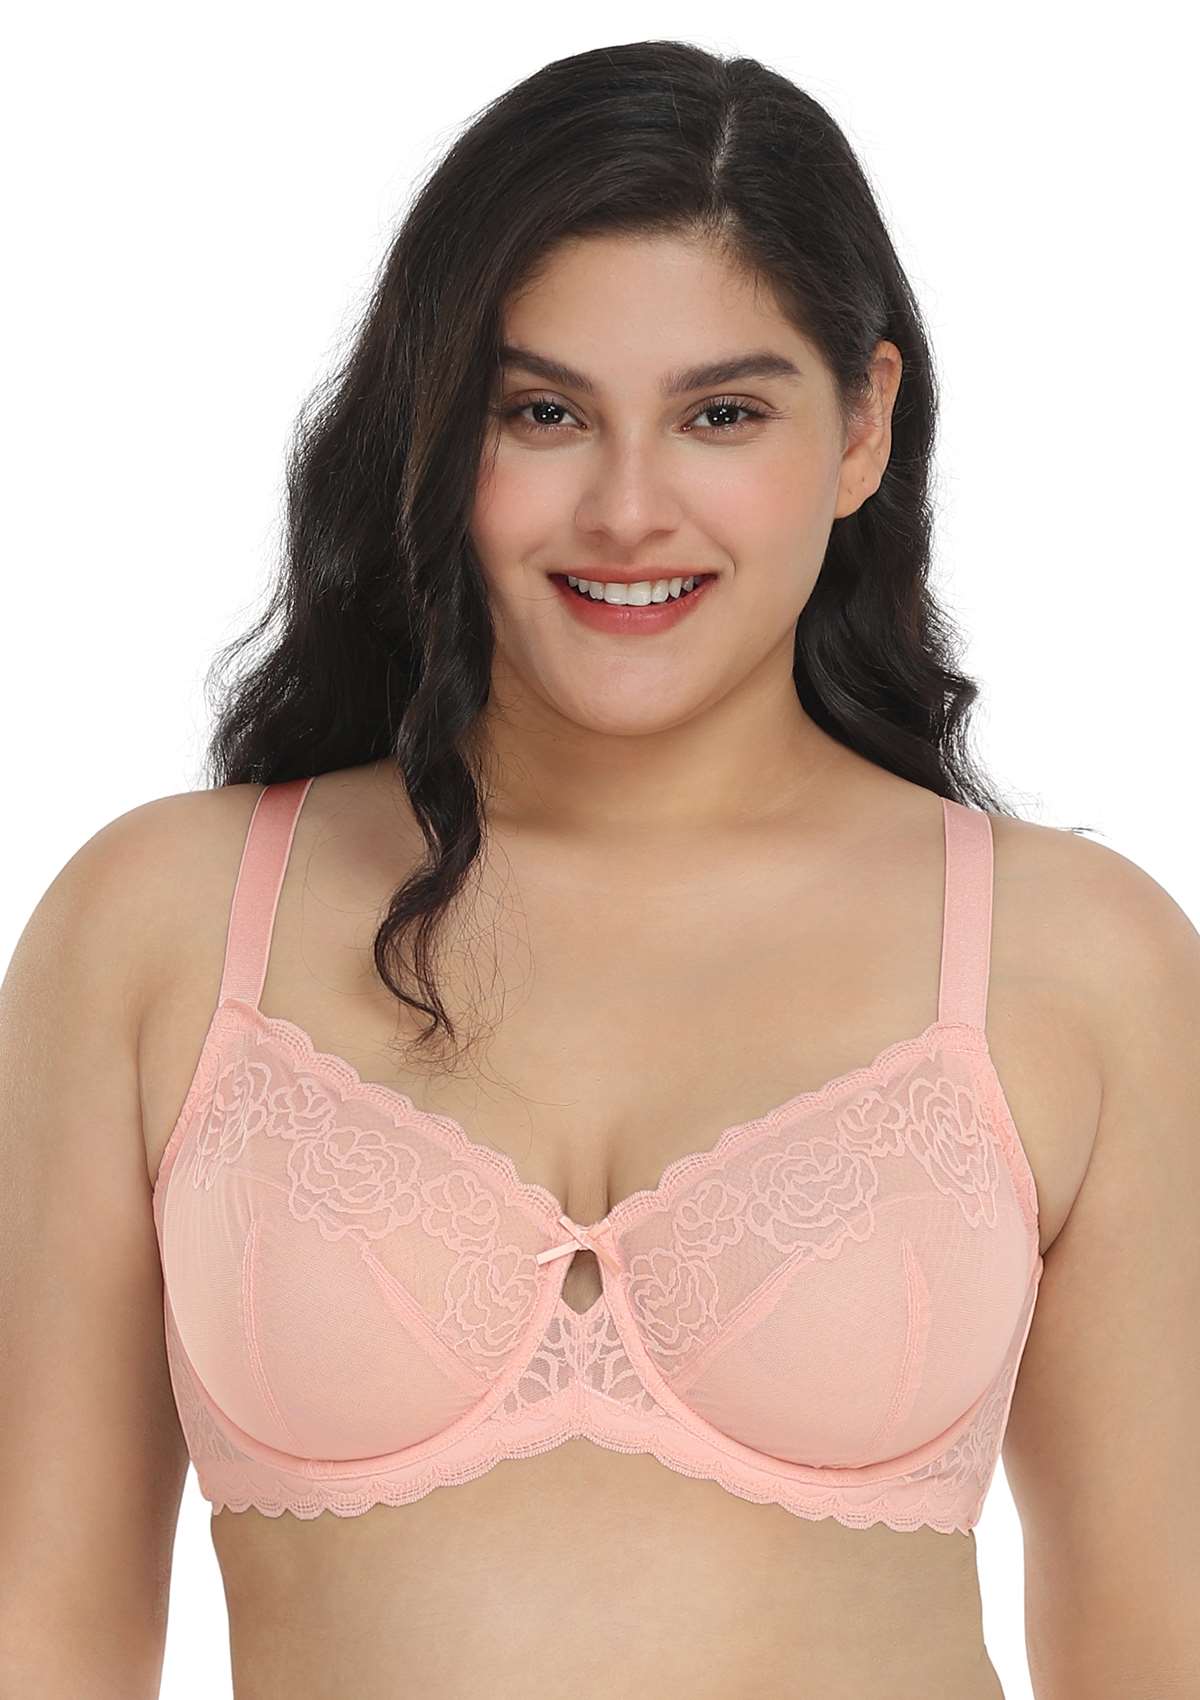 Akansha Cotton Ladies Pink Bra, Size: 28-48 Inches at Rs 75/piece